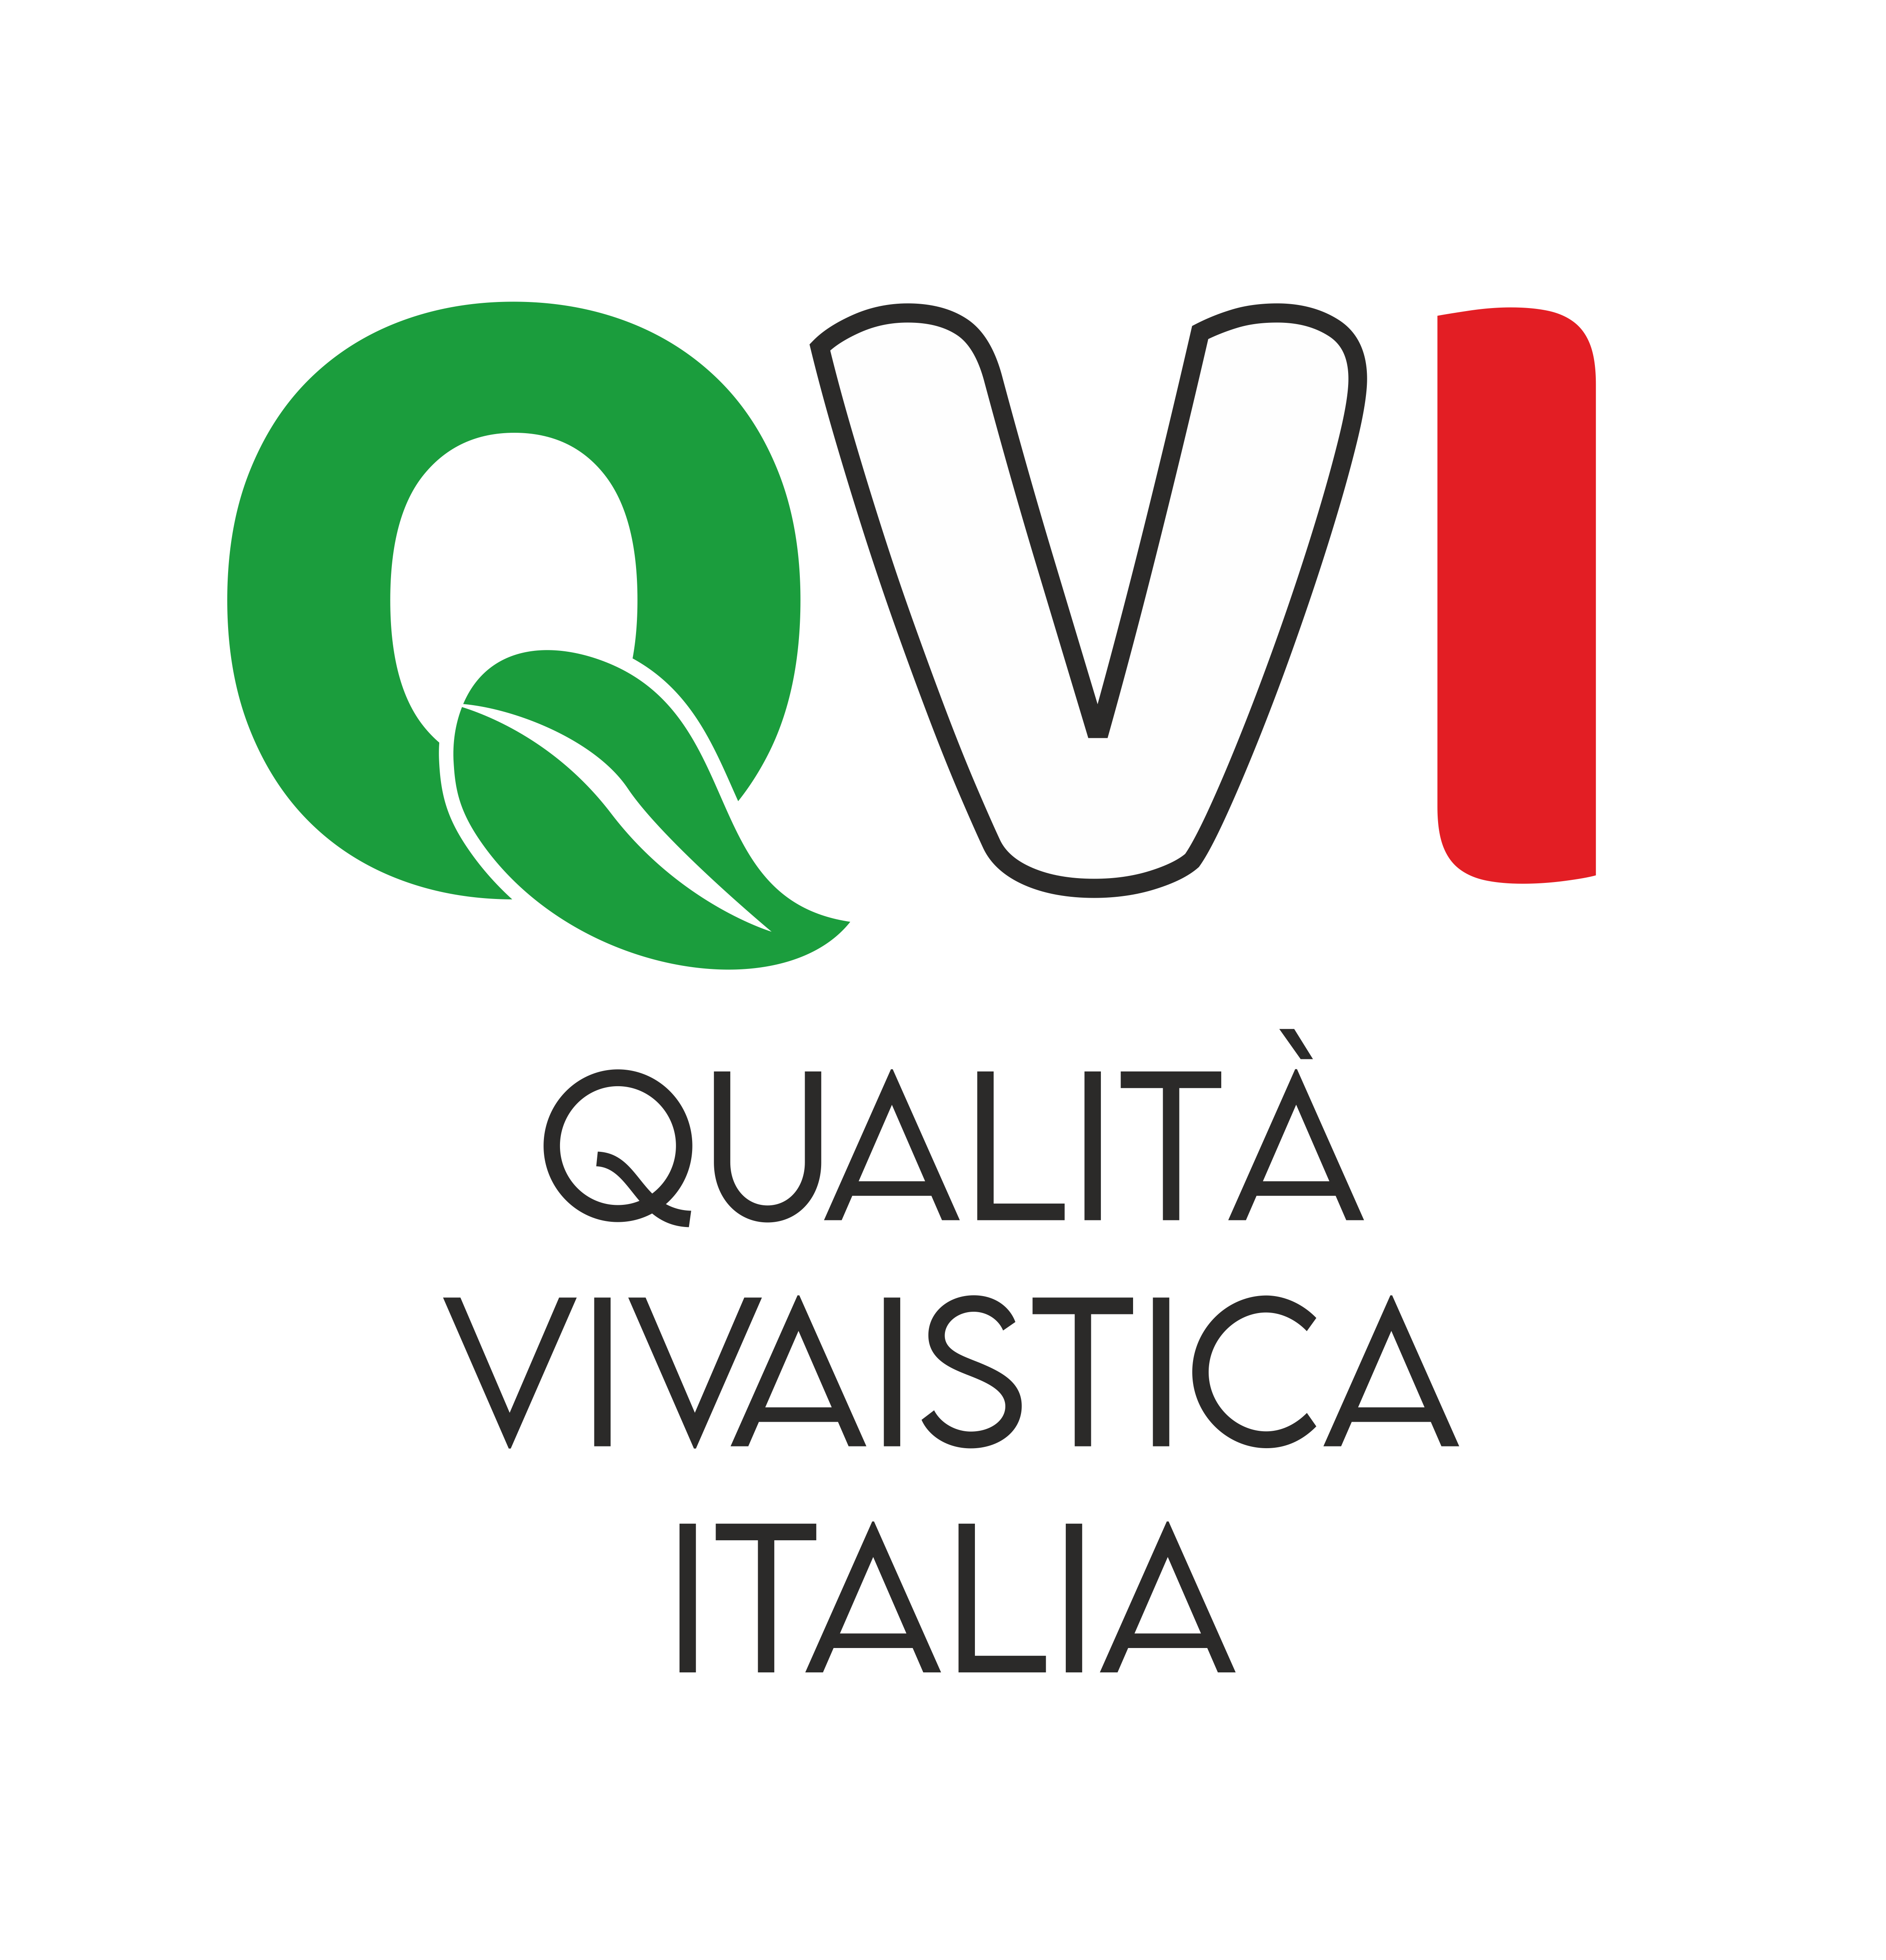 Qualità vivaistica ITALIA